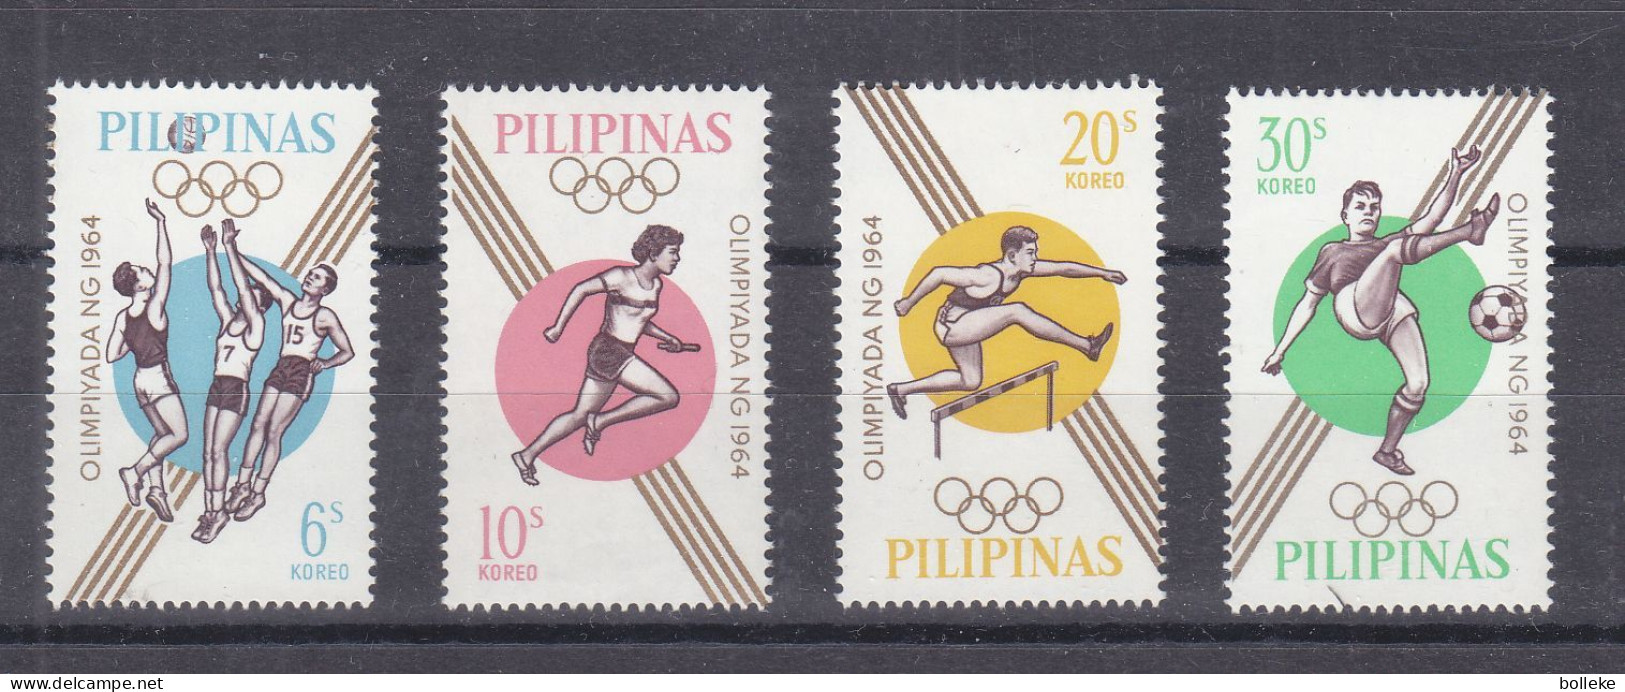 Jeux Oyimpiques - Tokyo 64 - Philippines - Yvert 605 / 8 ** -basket Ball - Haies - Football - Valeur 2,25 Euros - Ete 1964: Tokyo